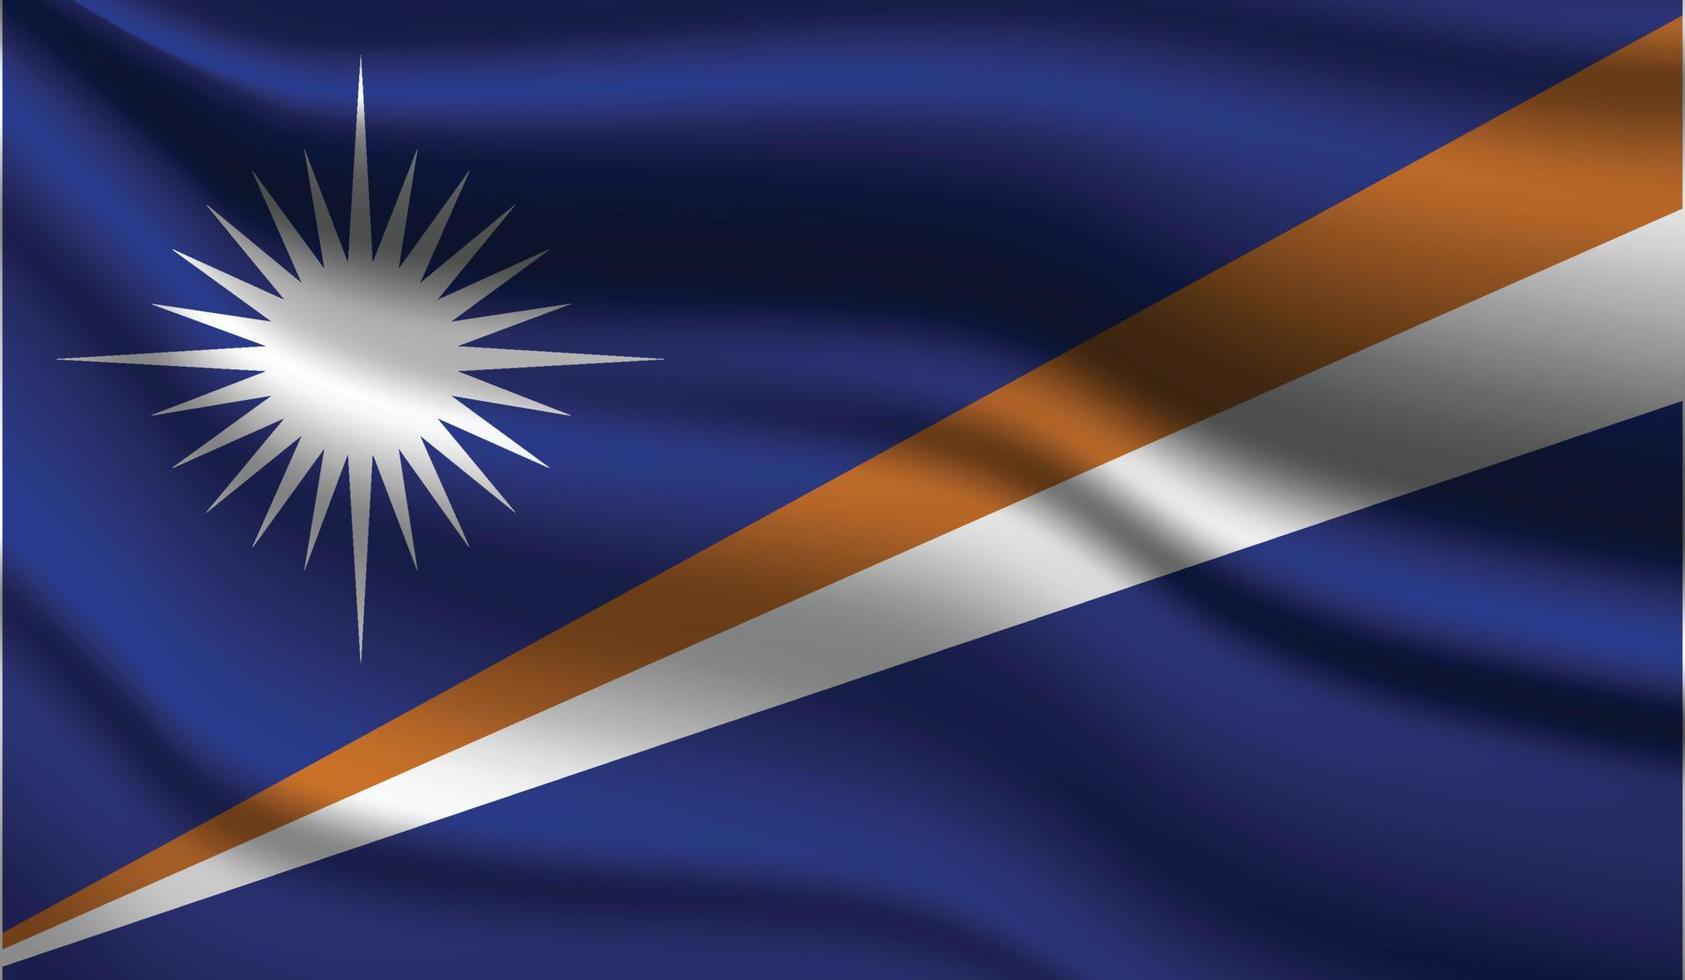 Design moderno realista da bandeira das Ilhas Marshall vetor